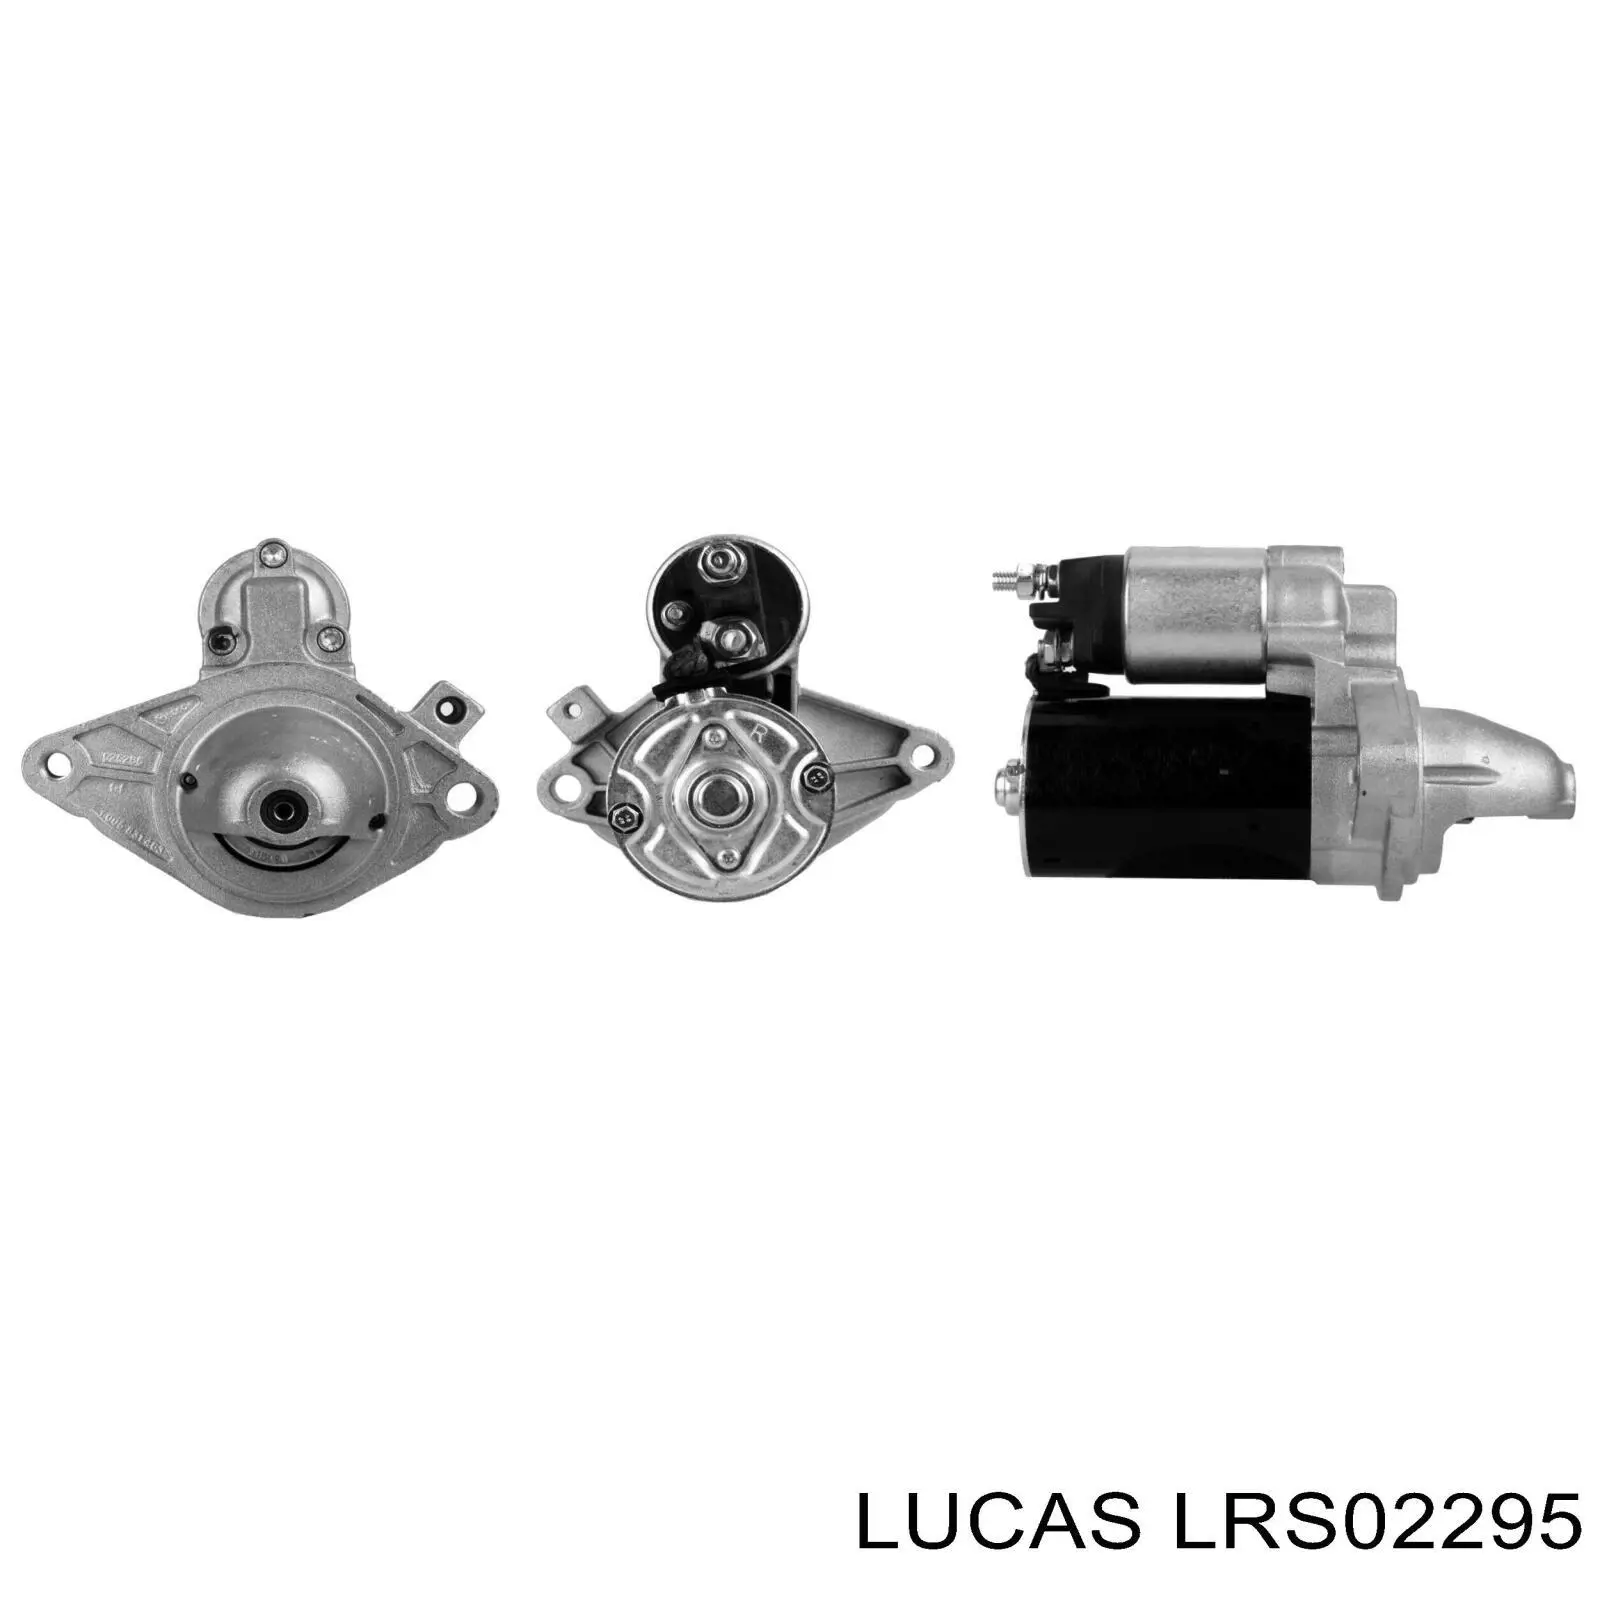 Motor de arranque LRS02295 Lucas